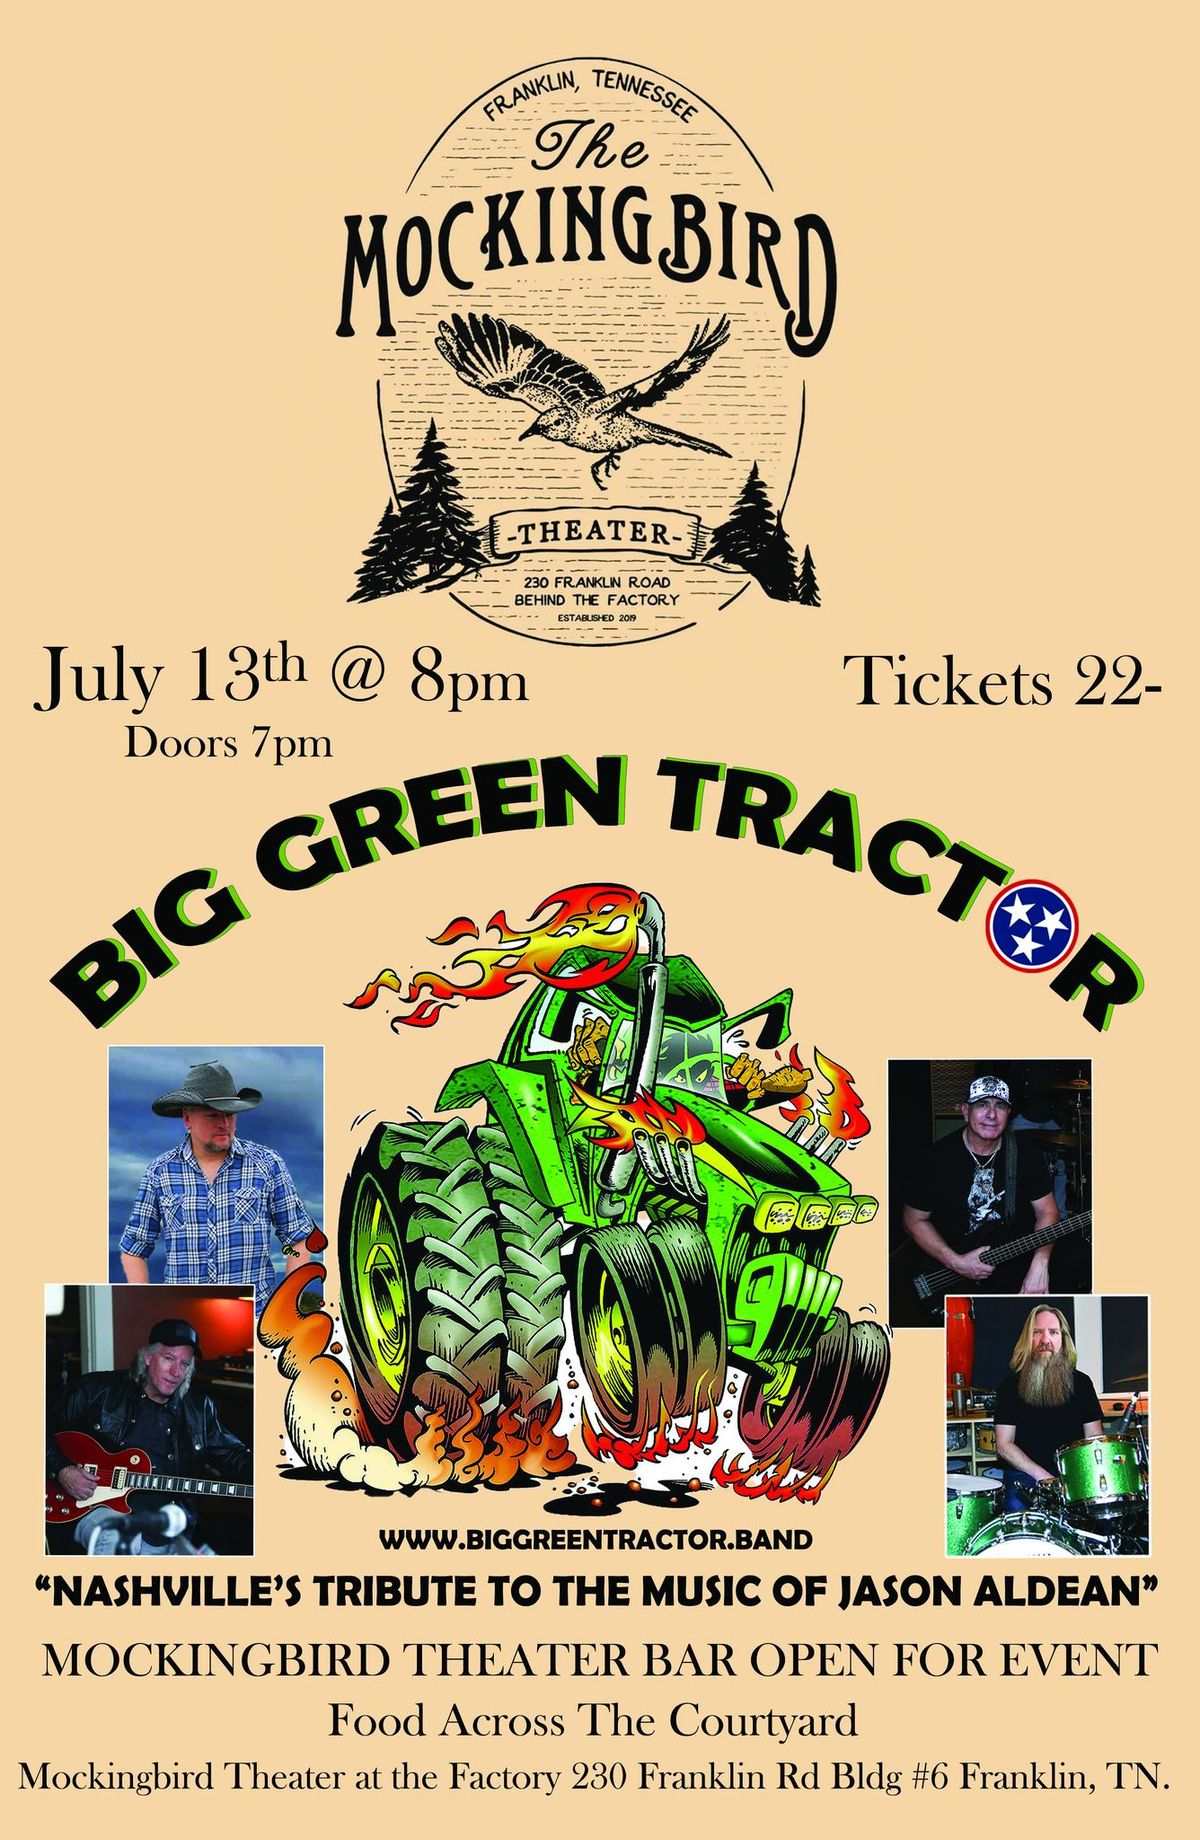 Big Green Tractor @ The Mocking Bird Theater in Franklin, TN.